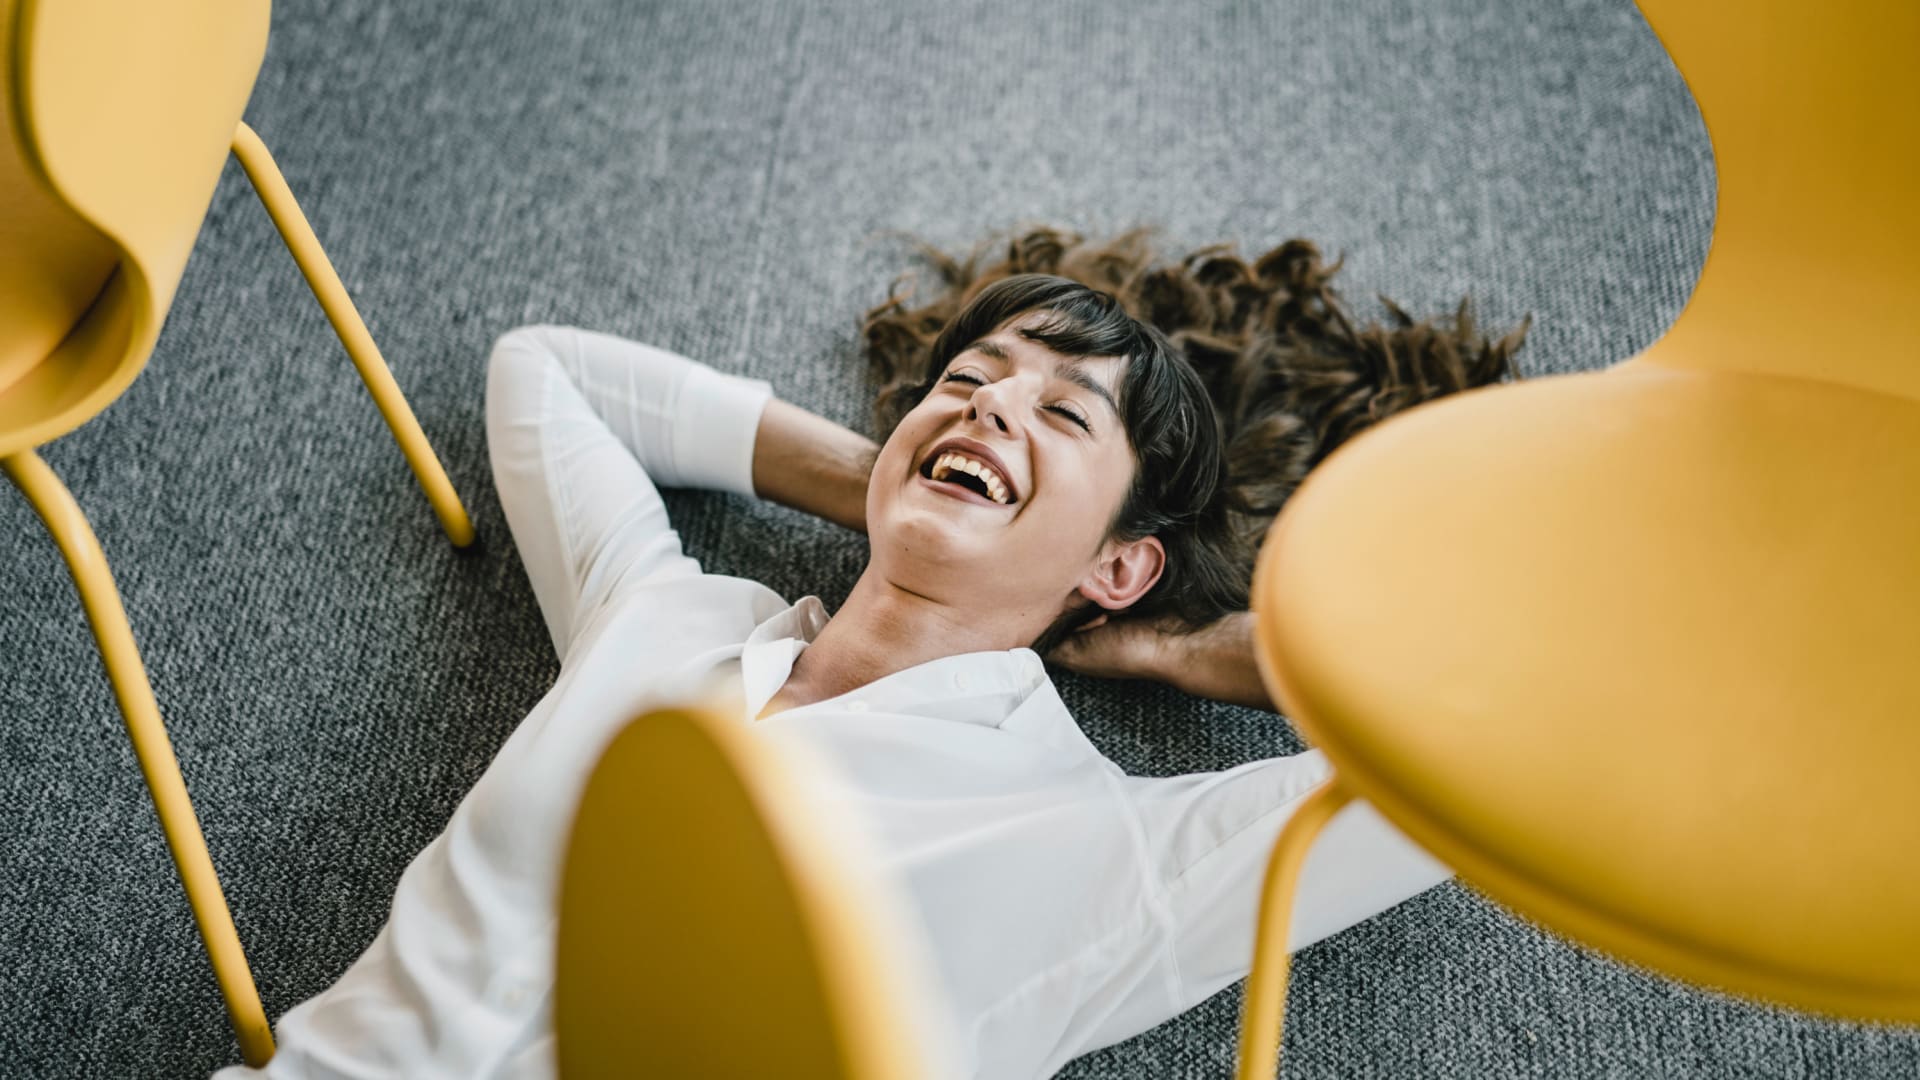 The Surprising Science of Having 'Fun' at Work